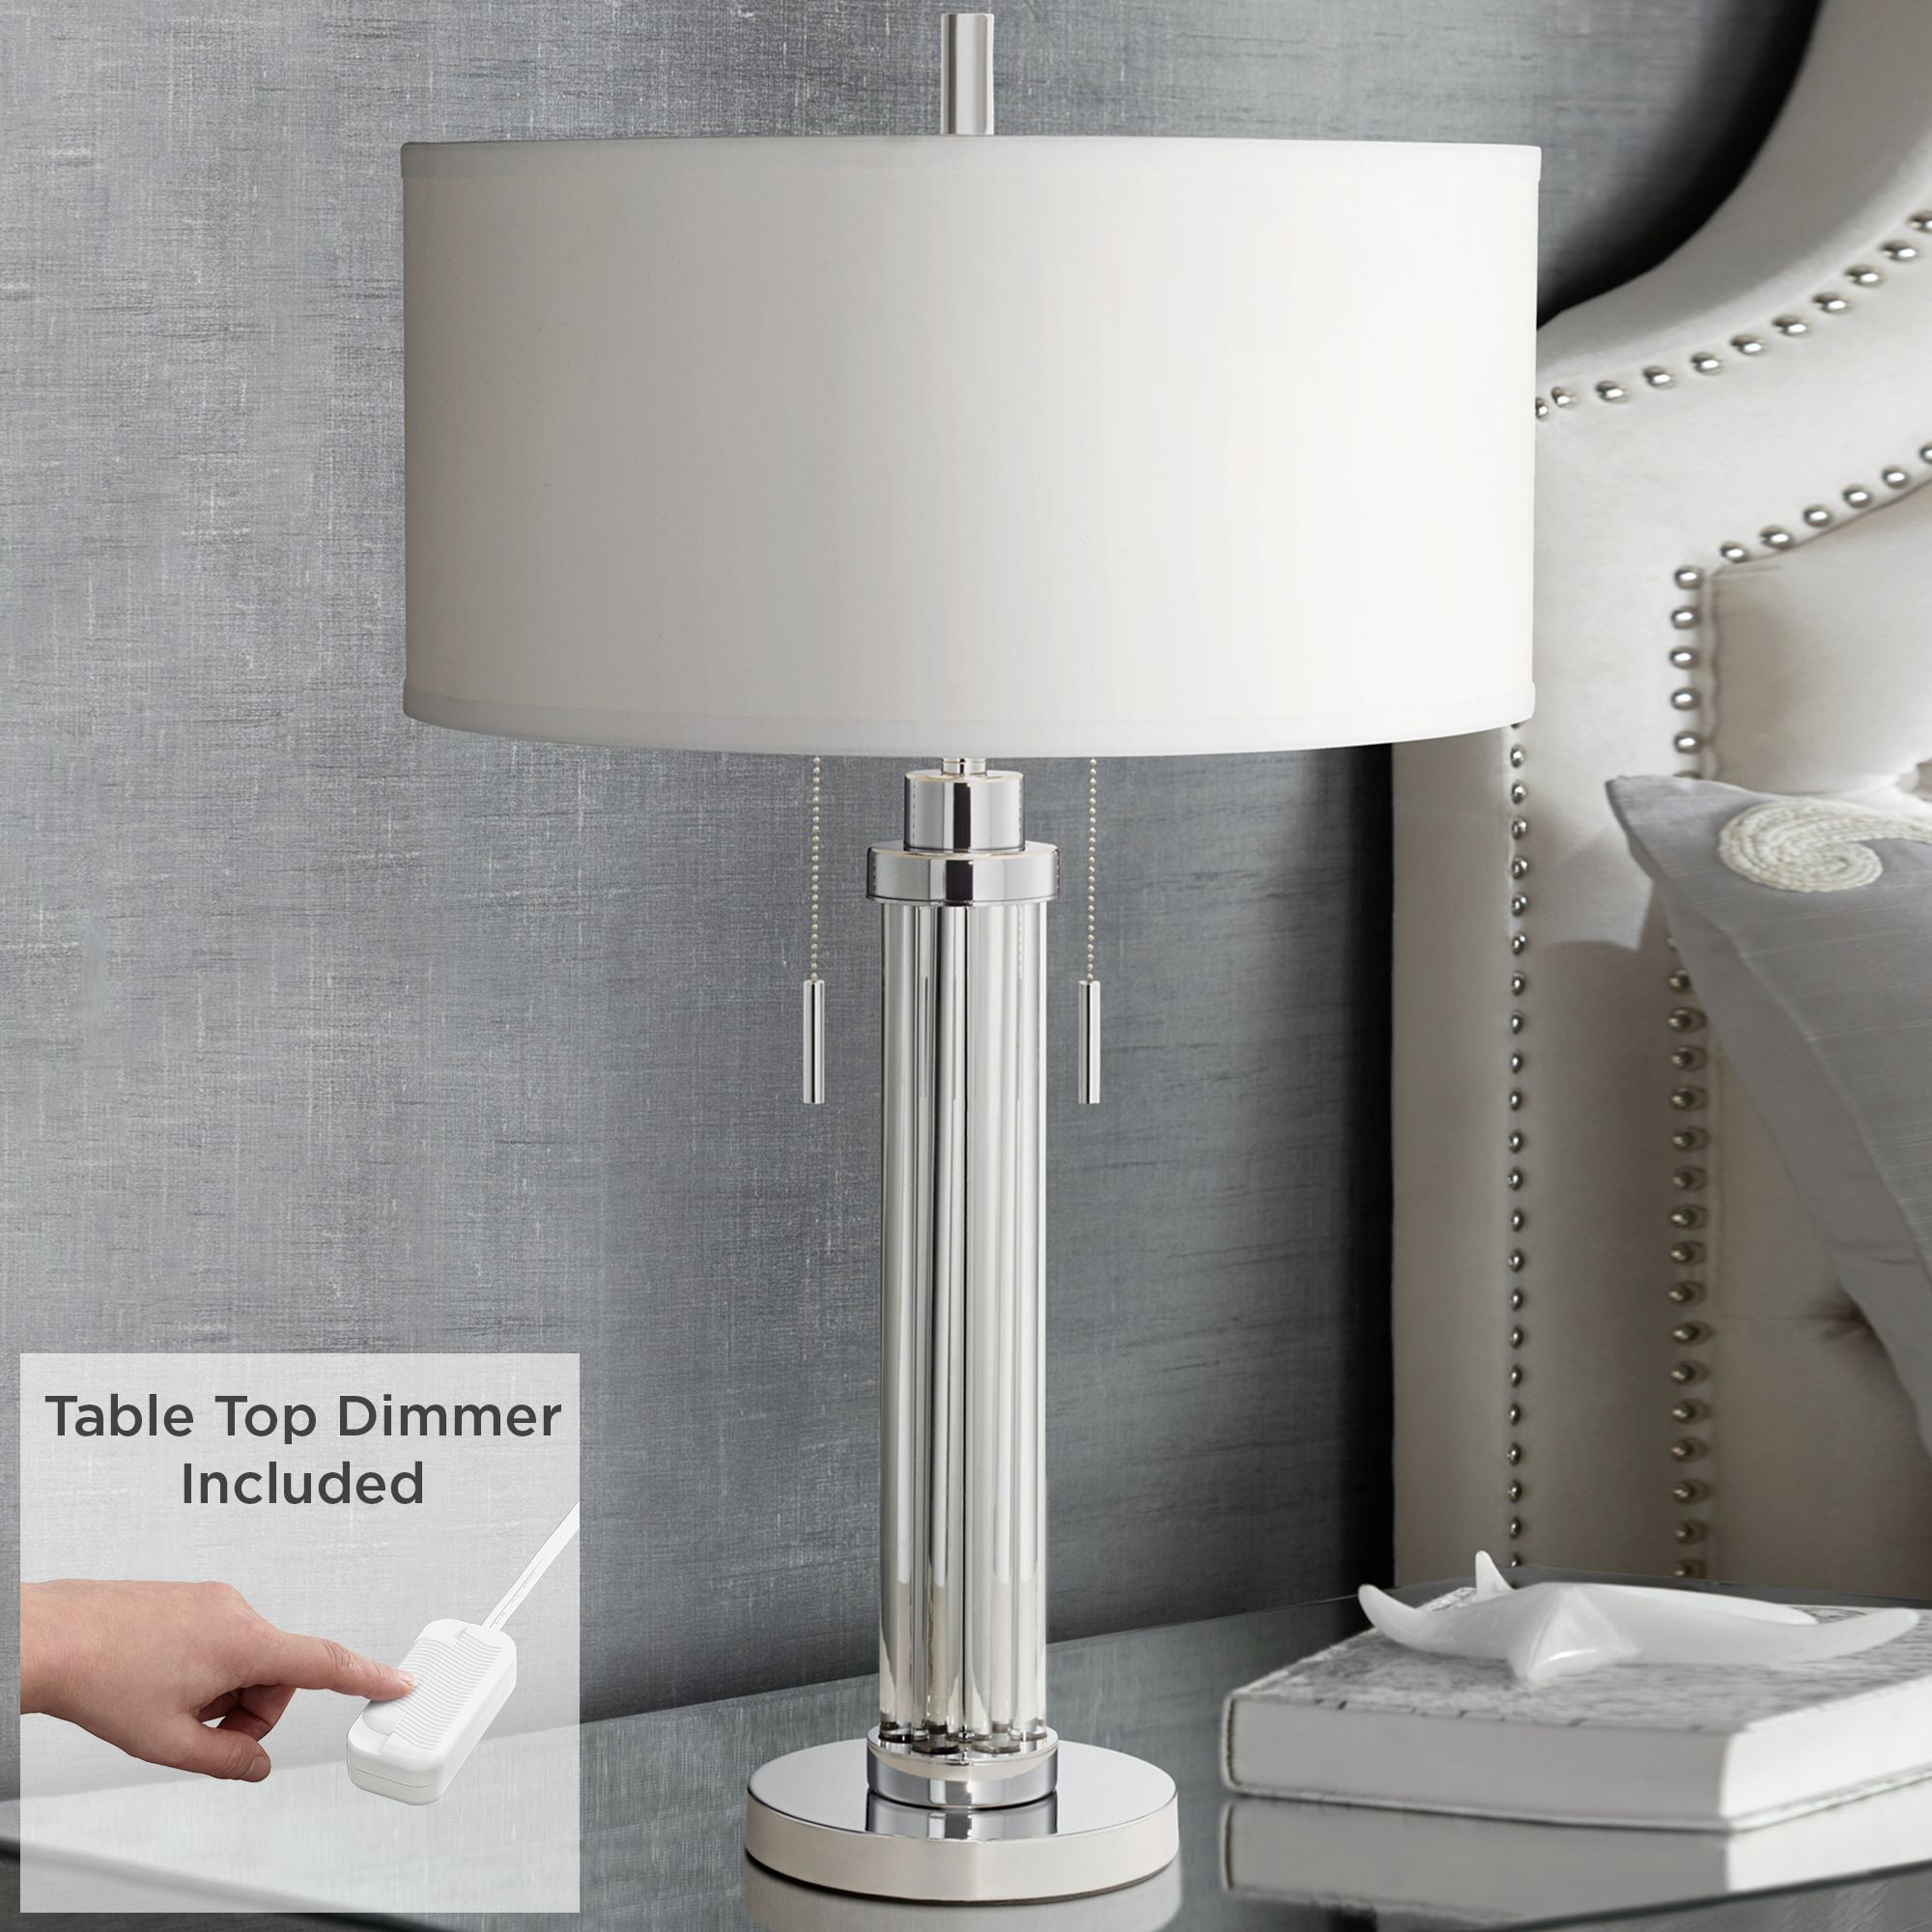 Possini Euro Design Modern Table Lamp, Possini Floor Lamp With Table Top